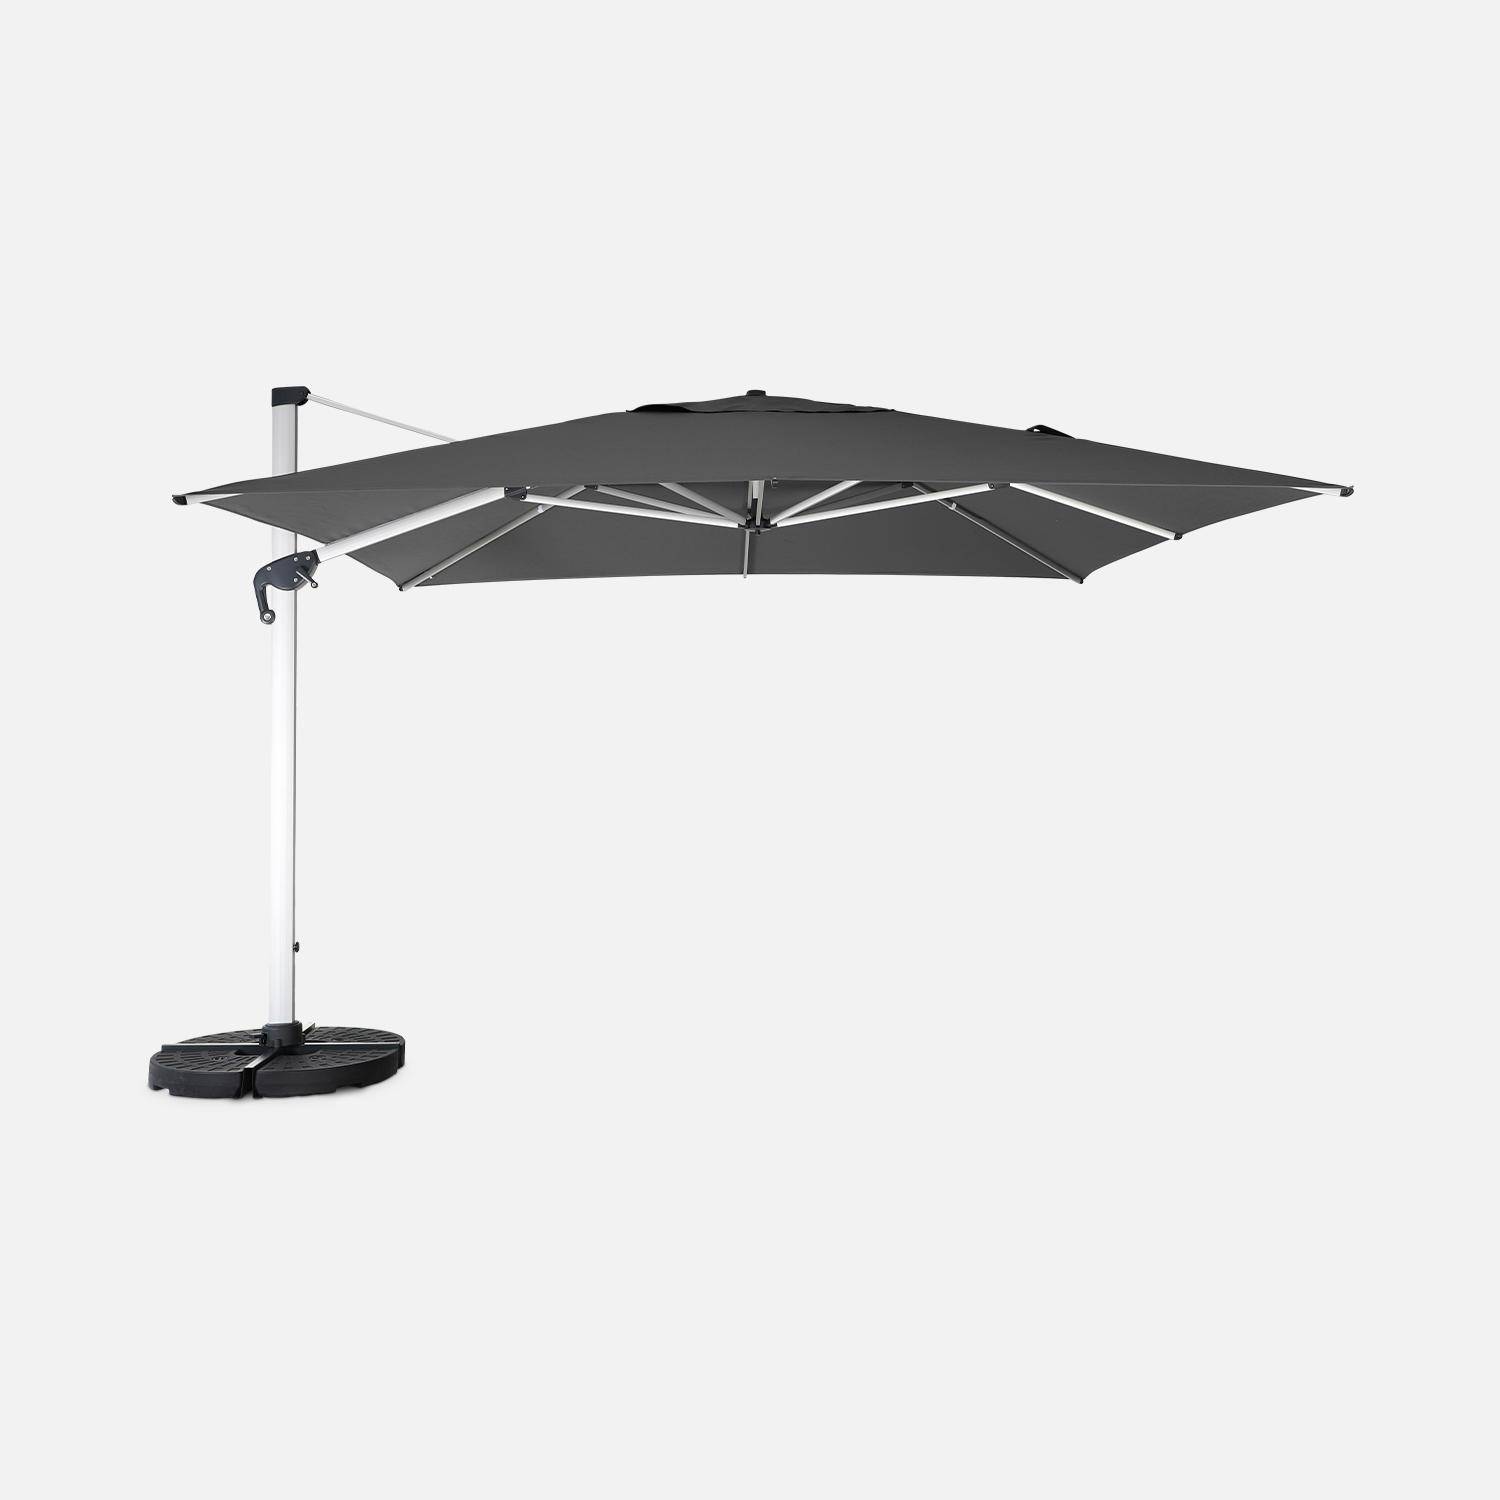 Topklasse parasol, 4x4m, grijs polyester doek, geanodiseerd aluminium frame, hoes inbegrepen Photo2